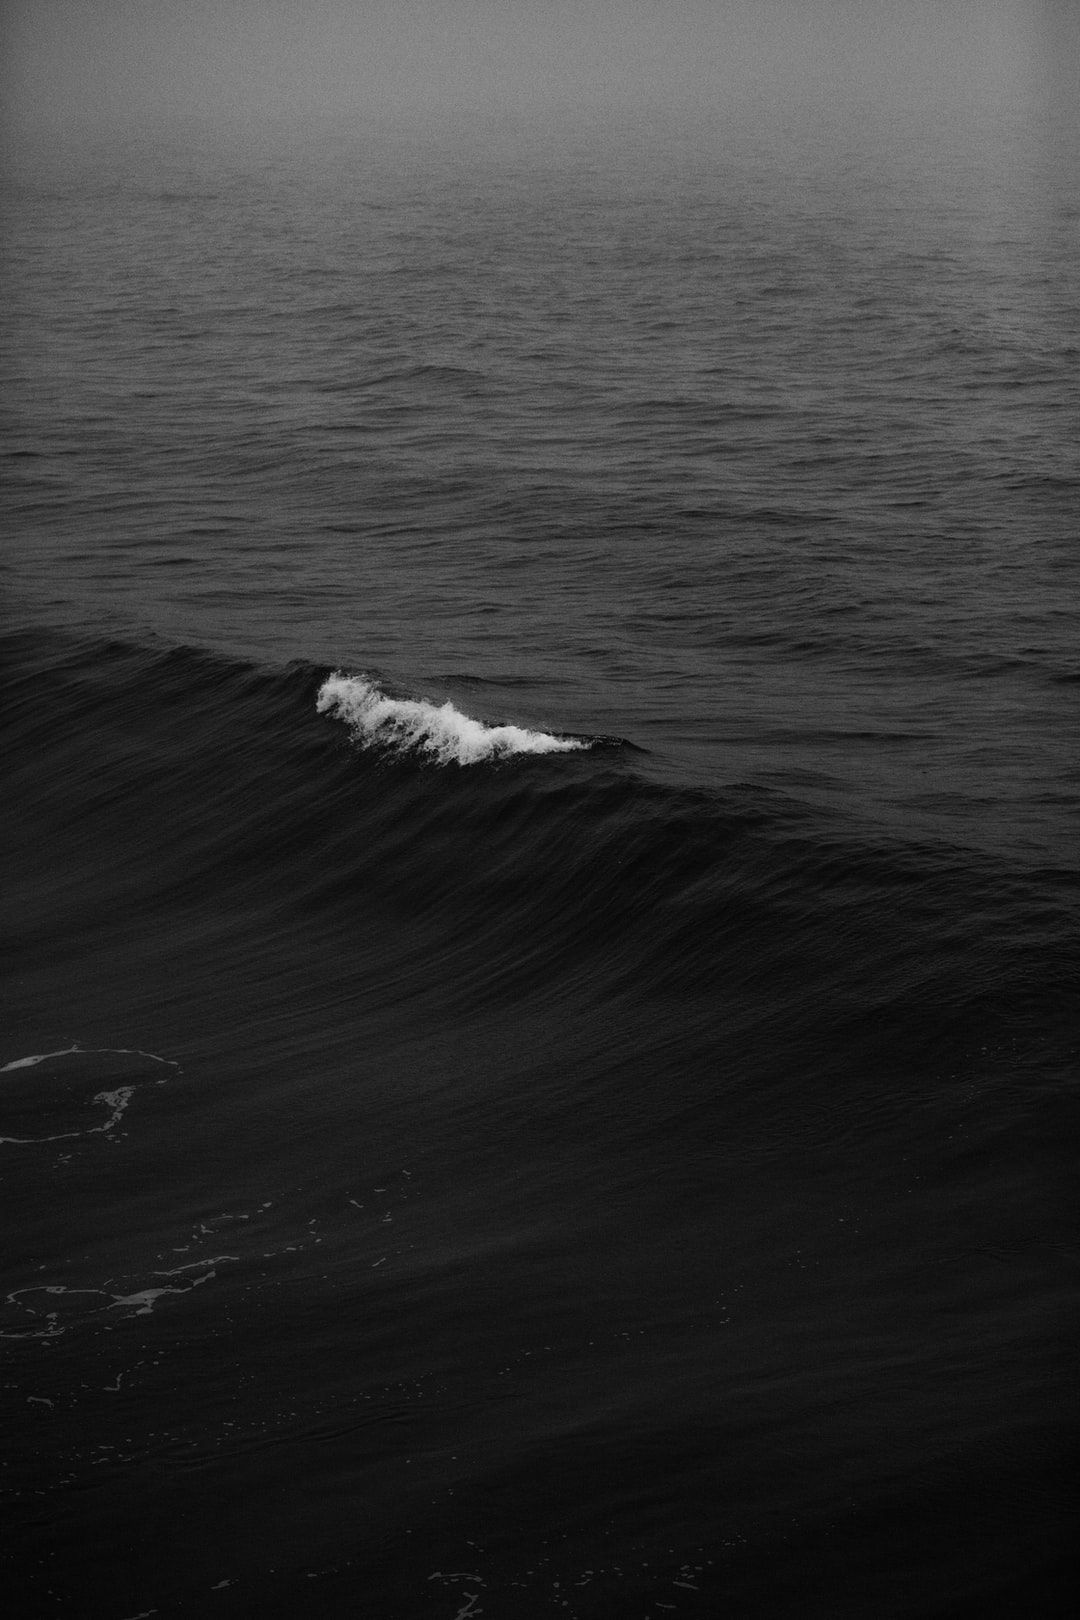 ocean wave in shallow focus lens photo .com